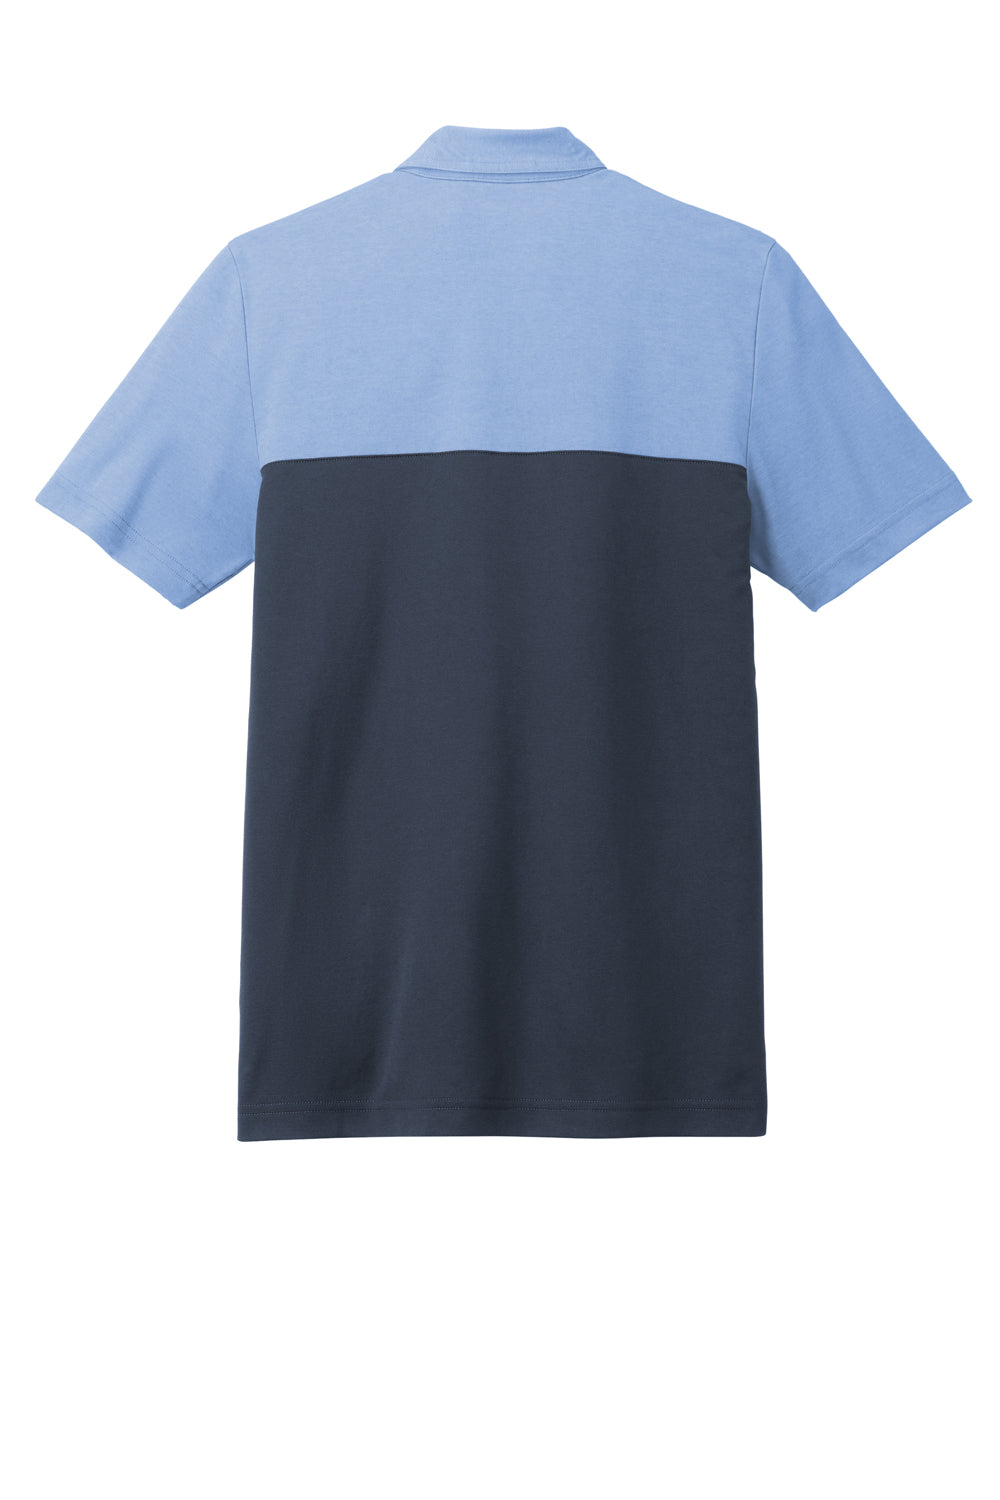 TravisMathew TM1MY401 Mens Sunset Blocked Wrinkle Resistant Short Sleeve Polo Shirt Heather Riviera Blue/Blue Nights Flat Back